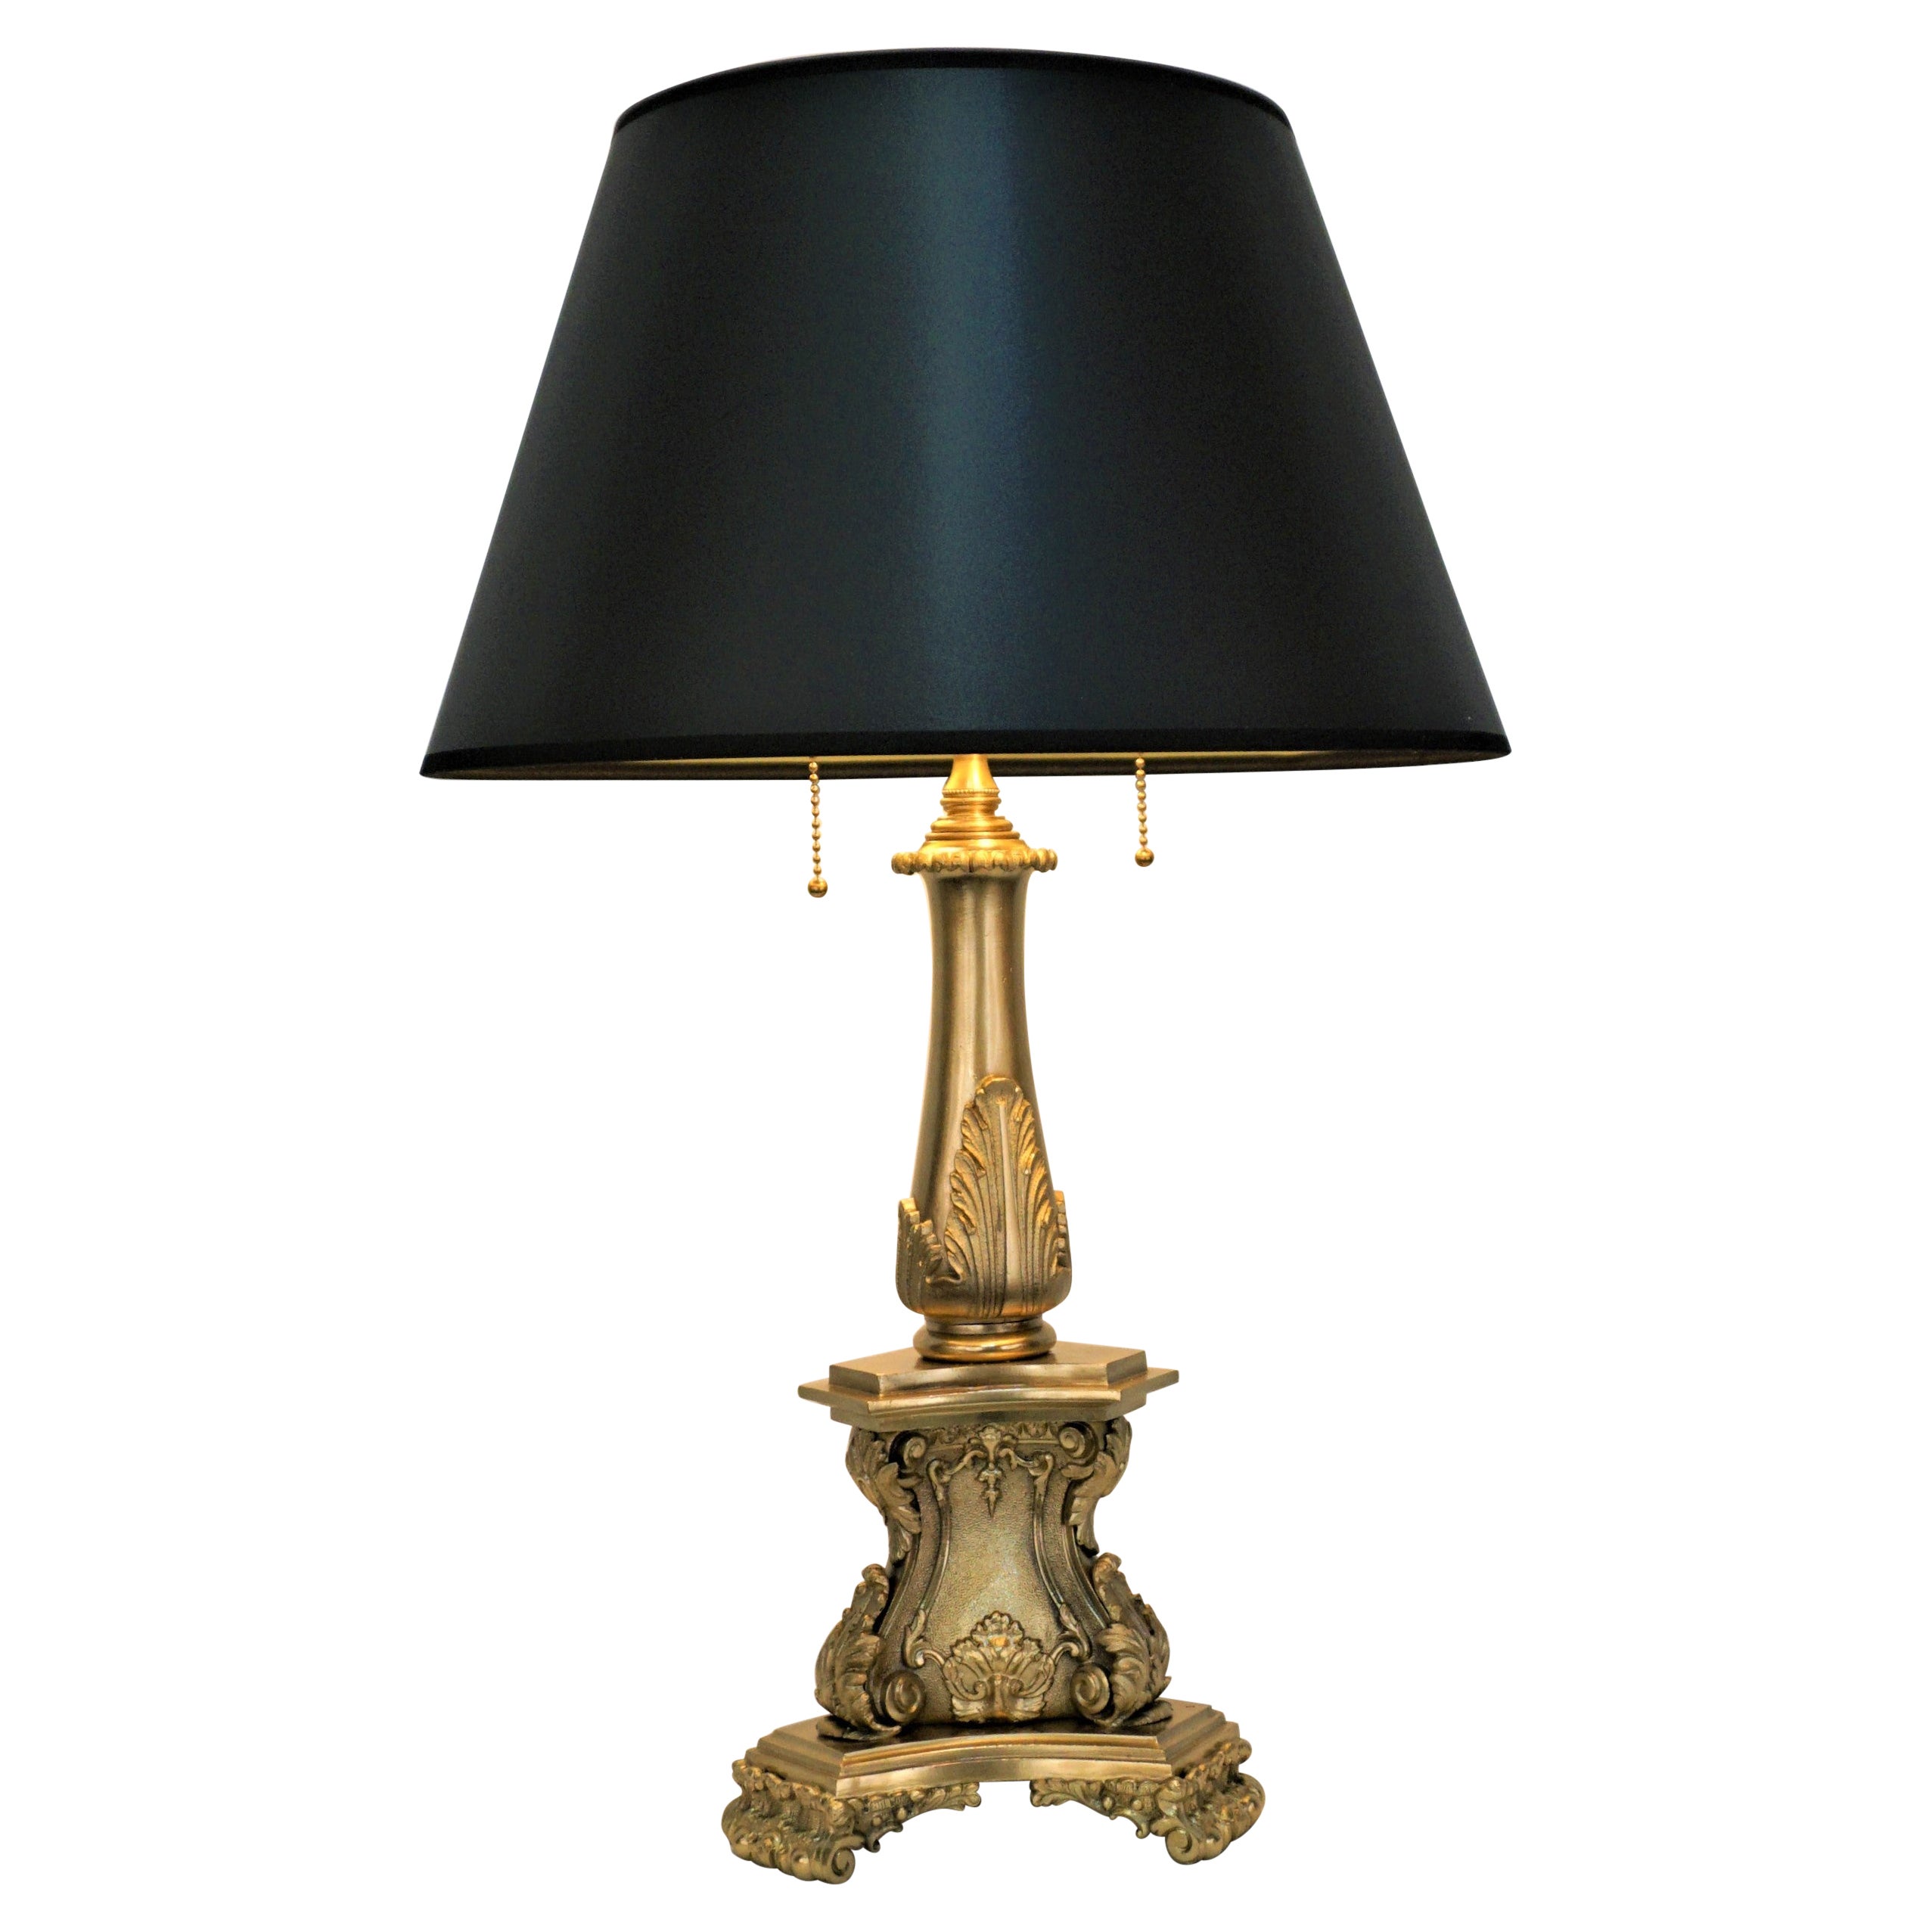 19th Century Bronze Table-Desk Lamp